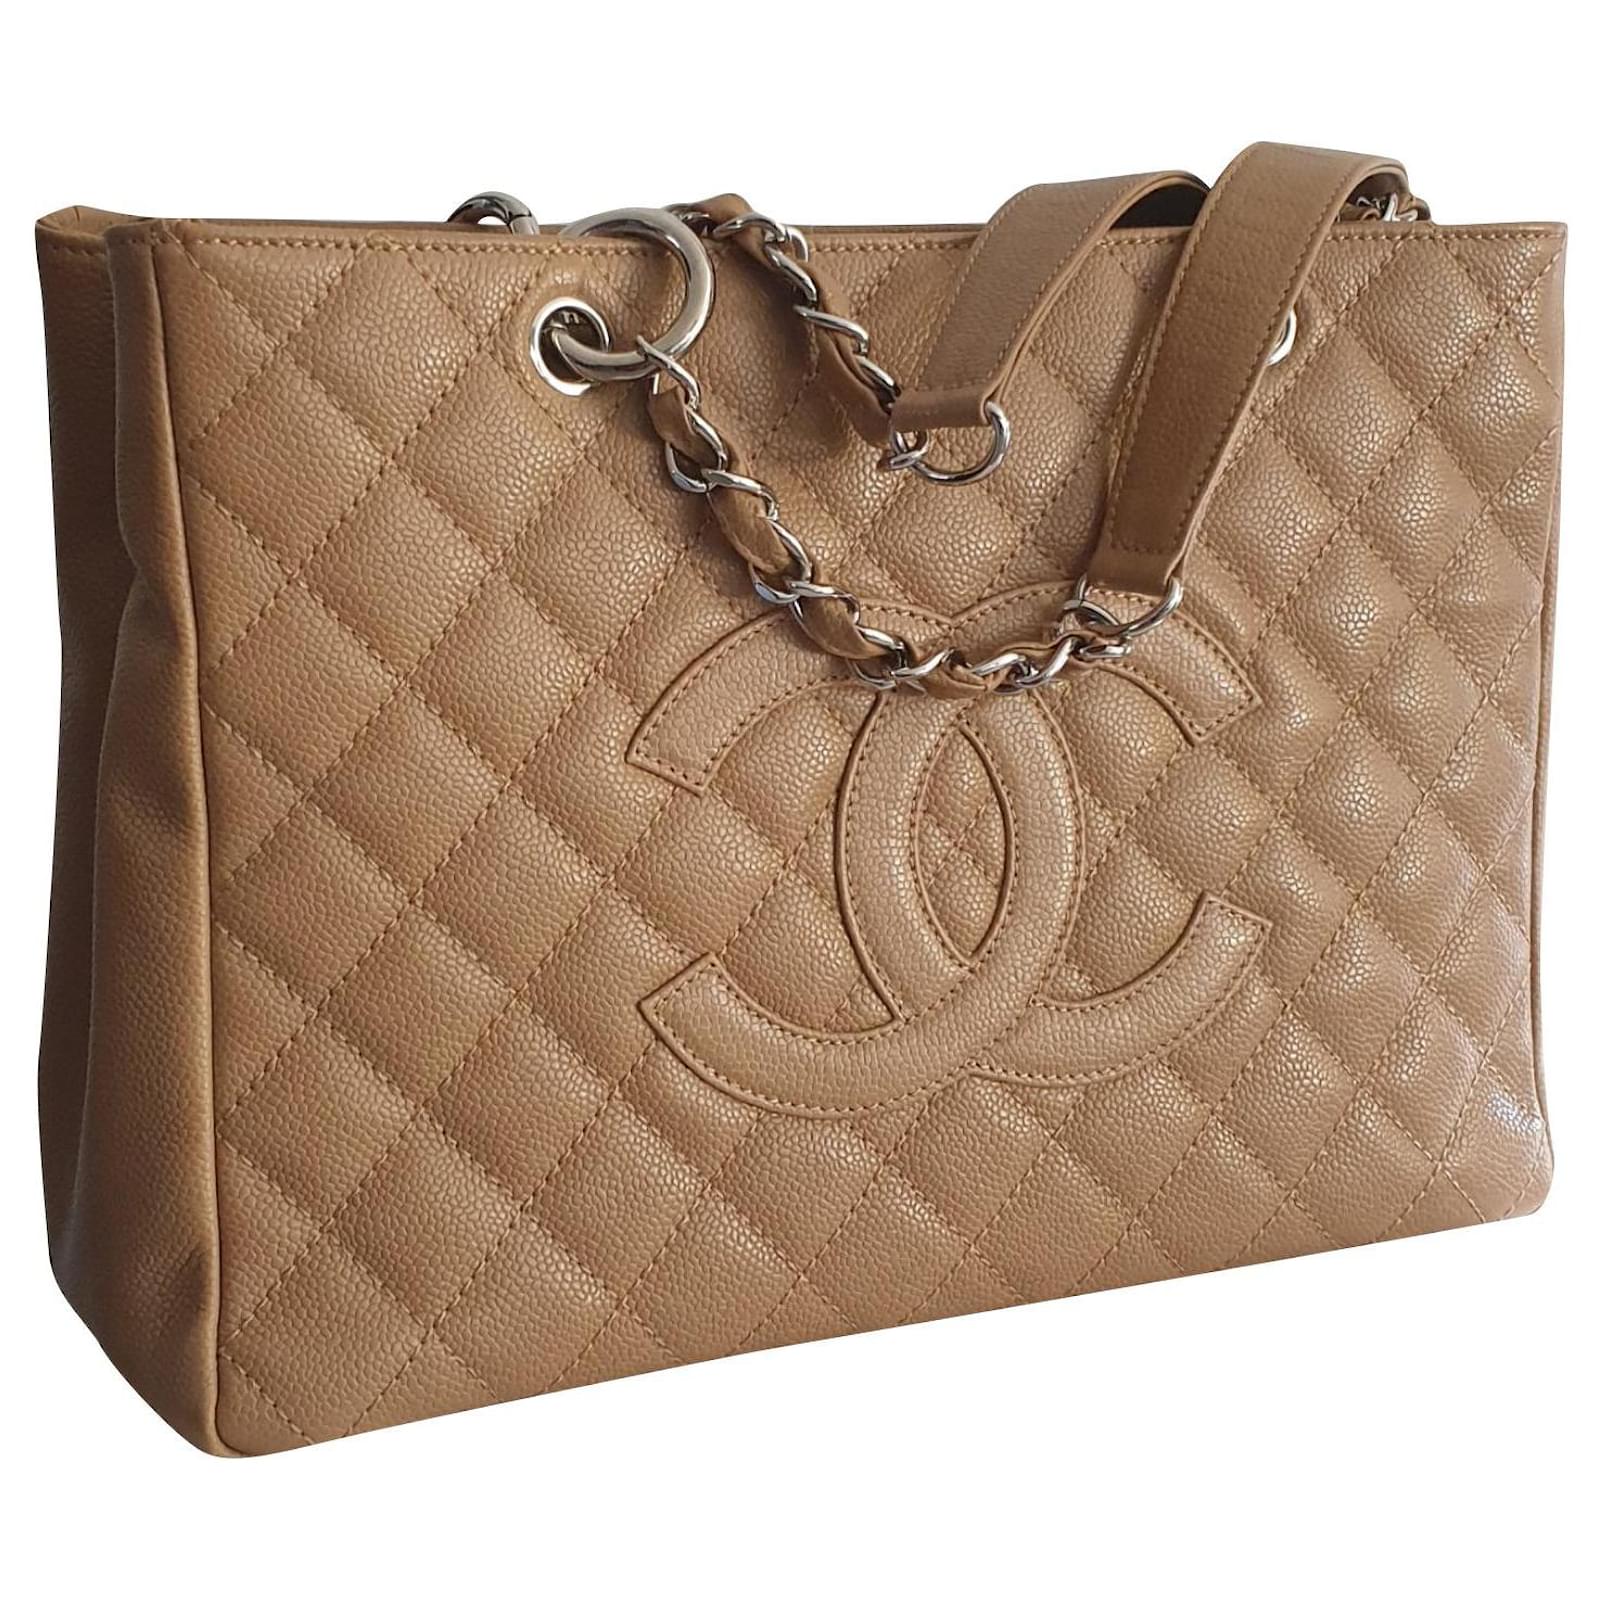 Handbags Chanel GST